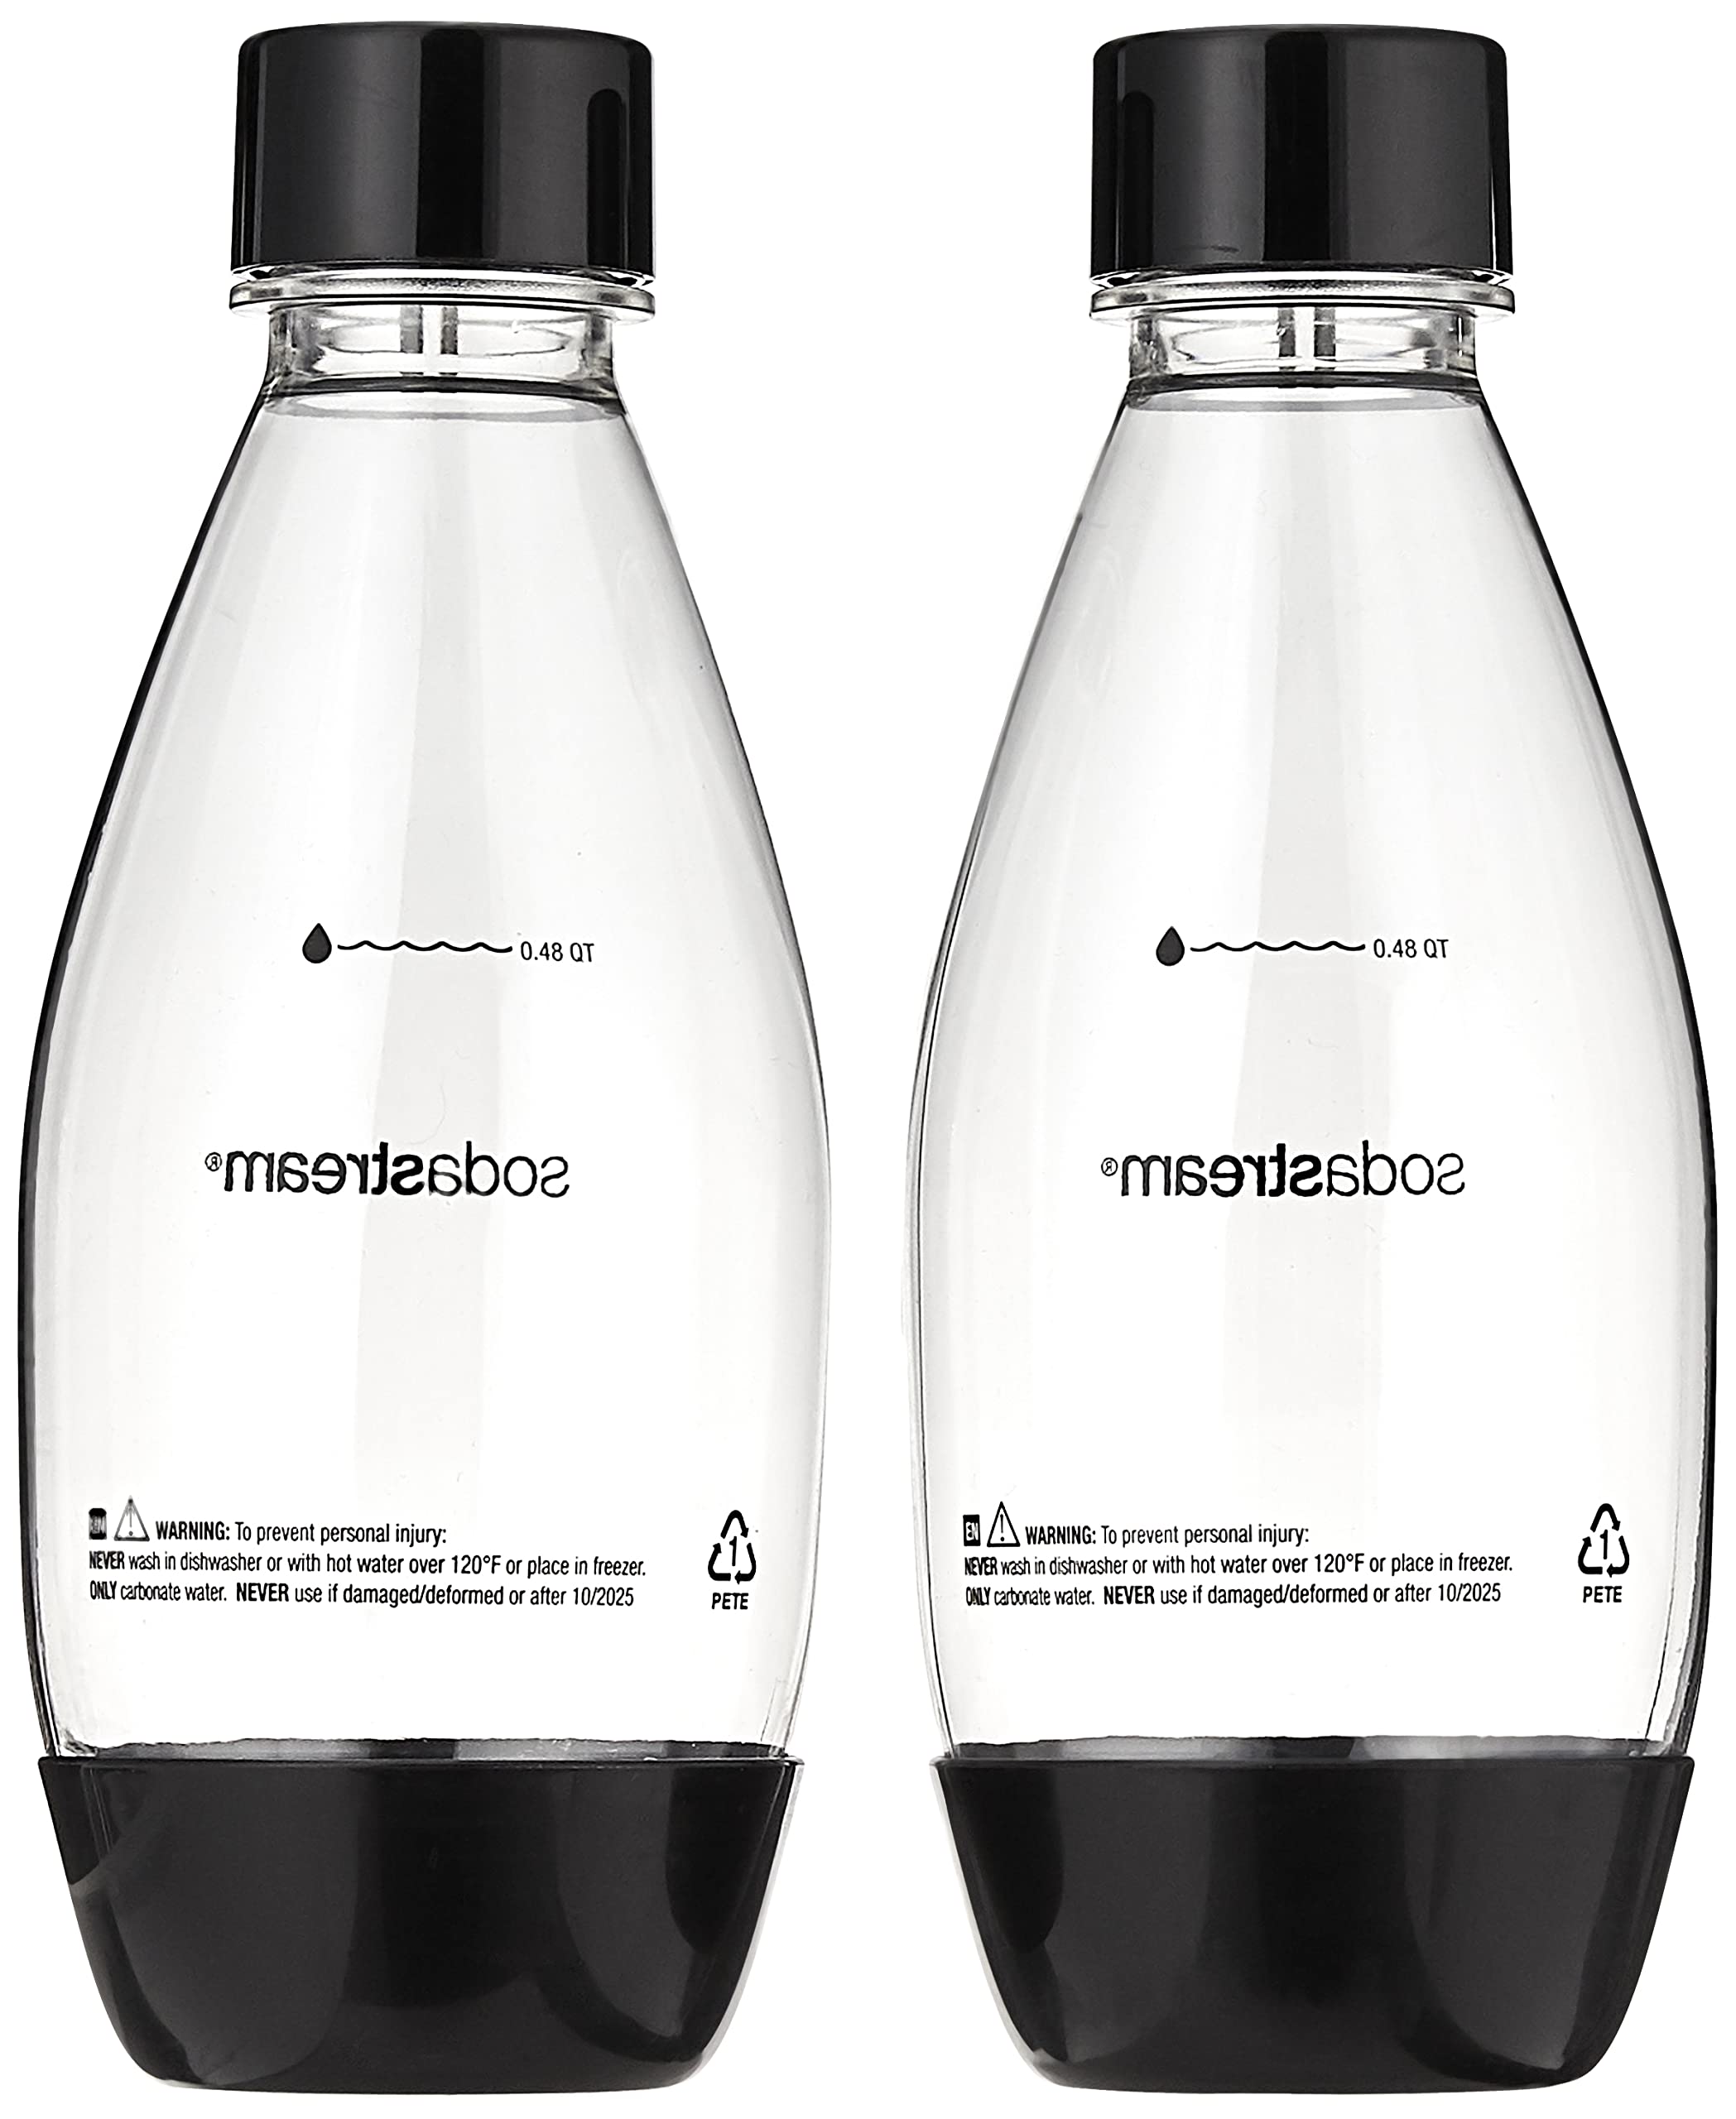 SodaStream 0.5L Slim Black Carbonating Bottles (Pack of 2)